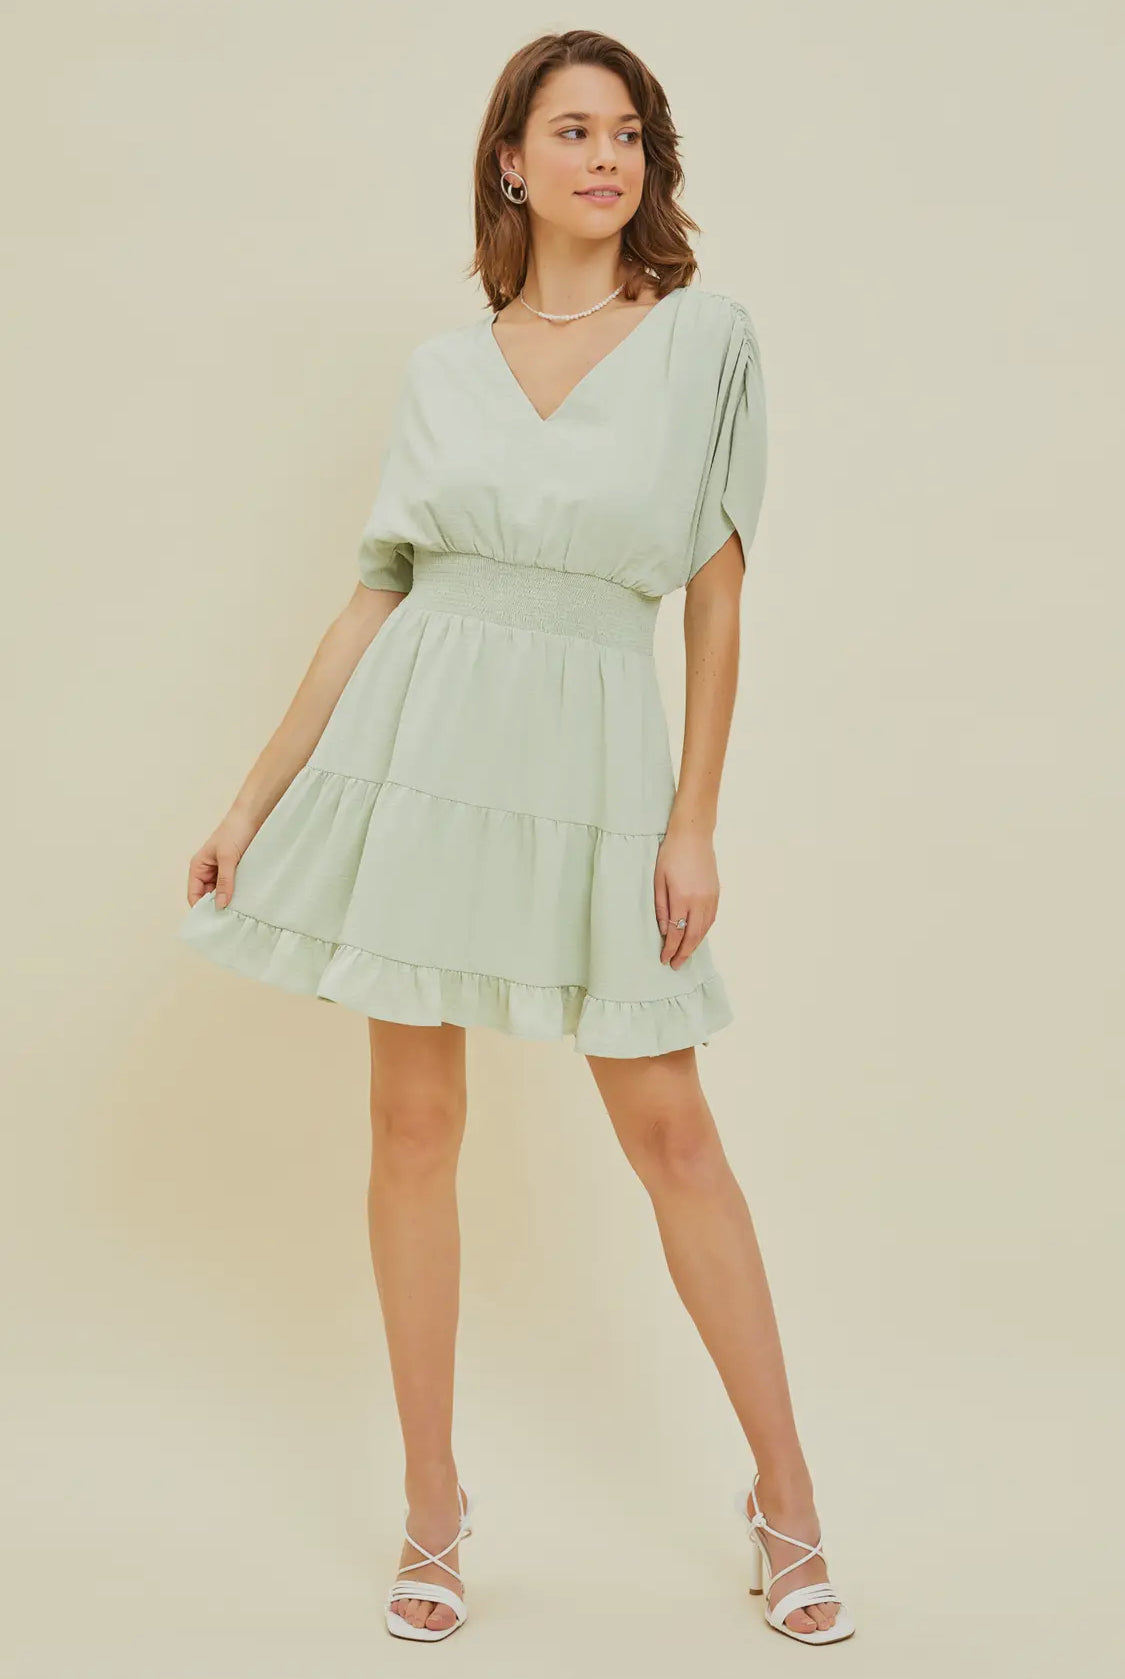 Bright Side Mint Green Tiered Ruffle Dress